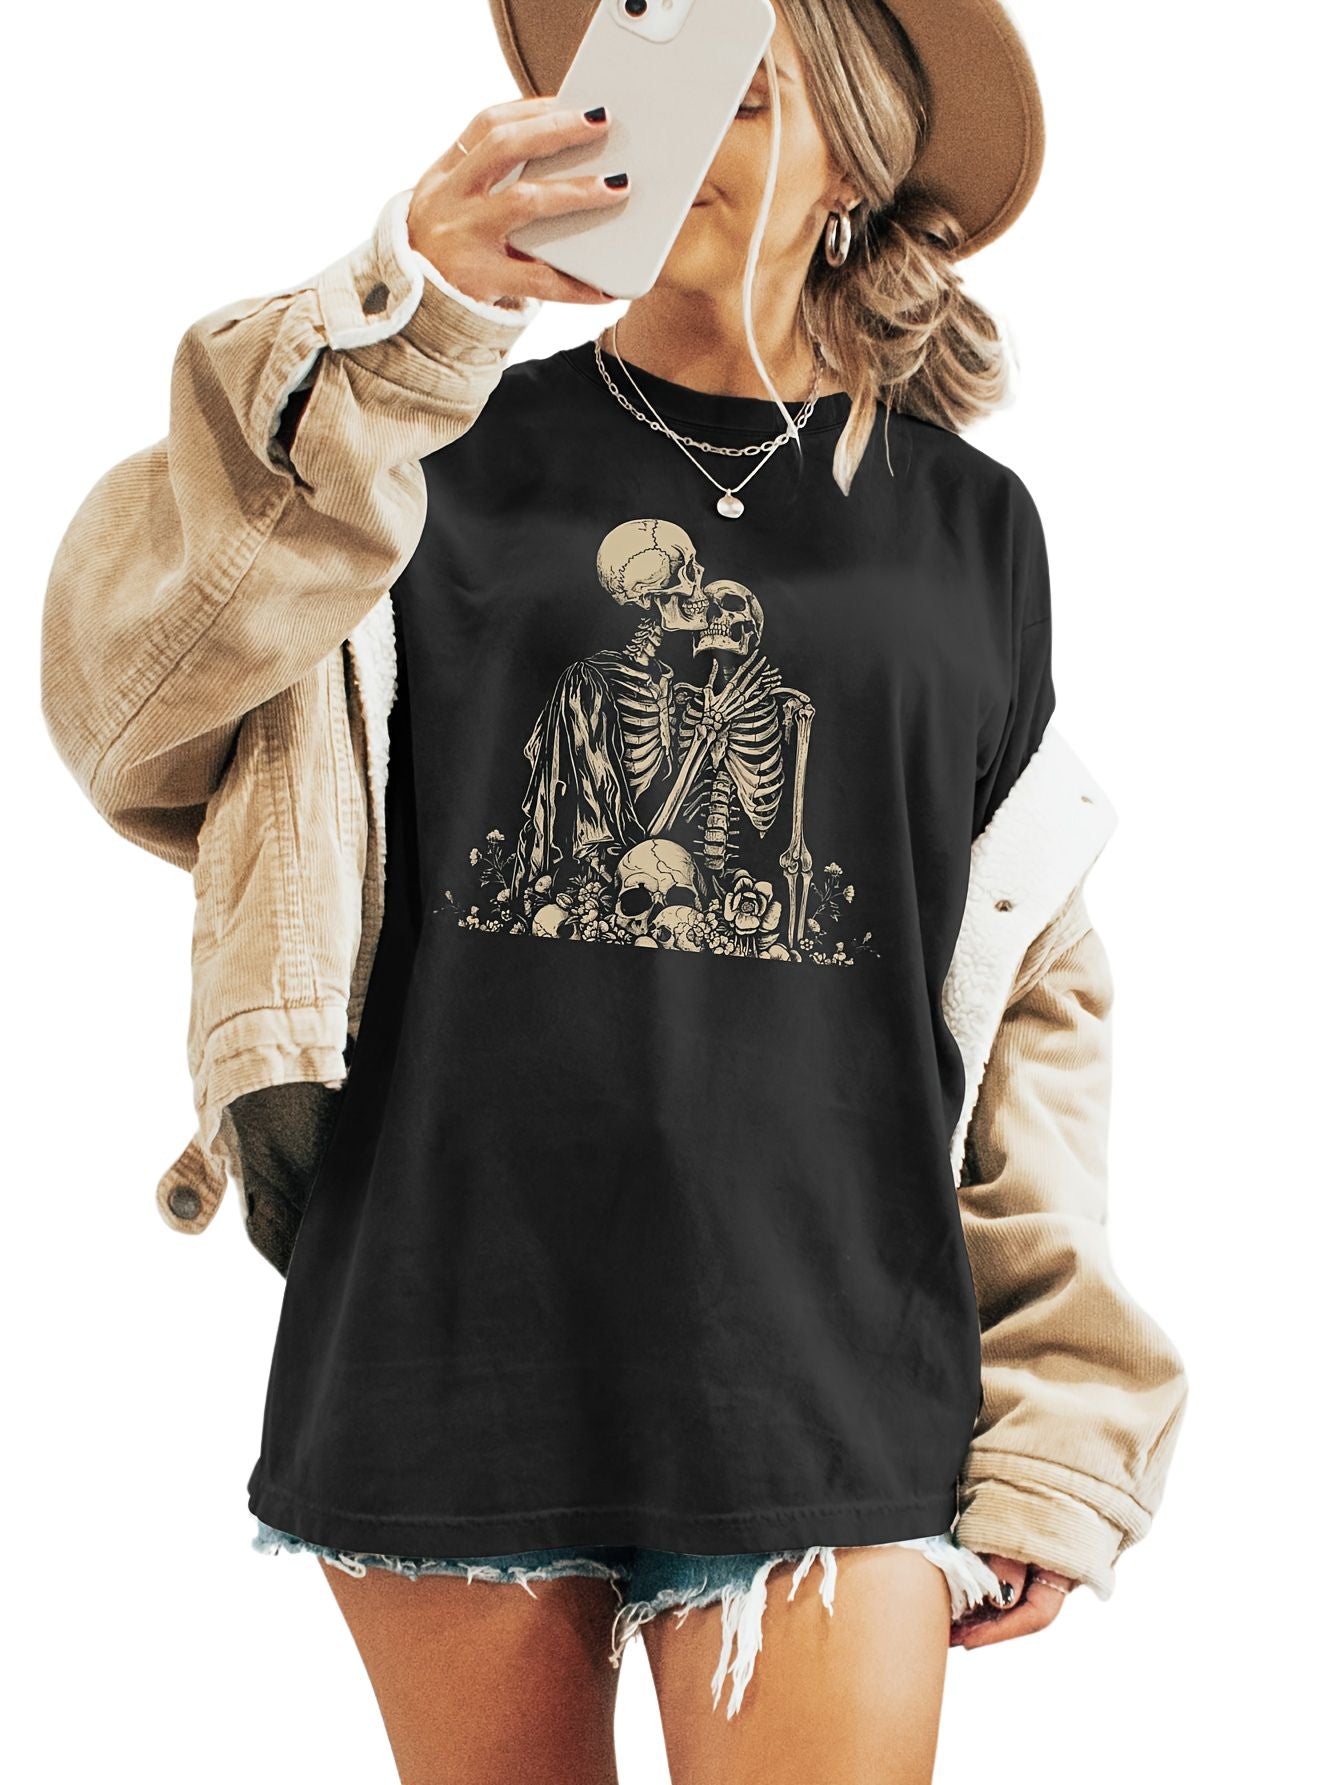 Hugging Skull Print Crew Neck T-shirt, Short Sleeve Casual Top For Summer & Spring, Women's Clothing